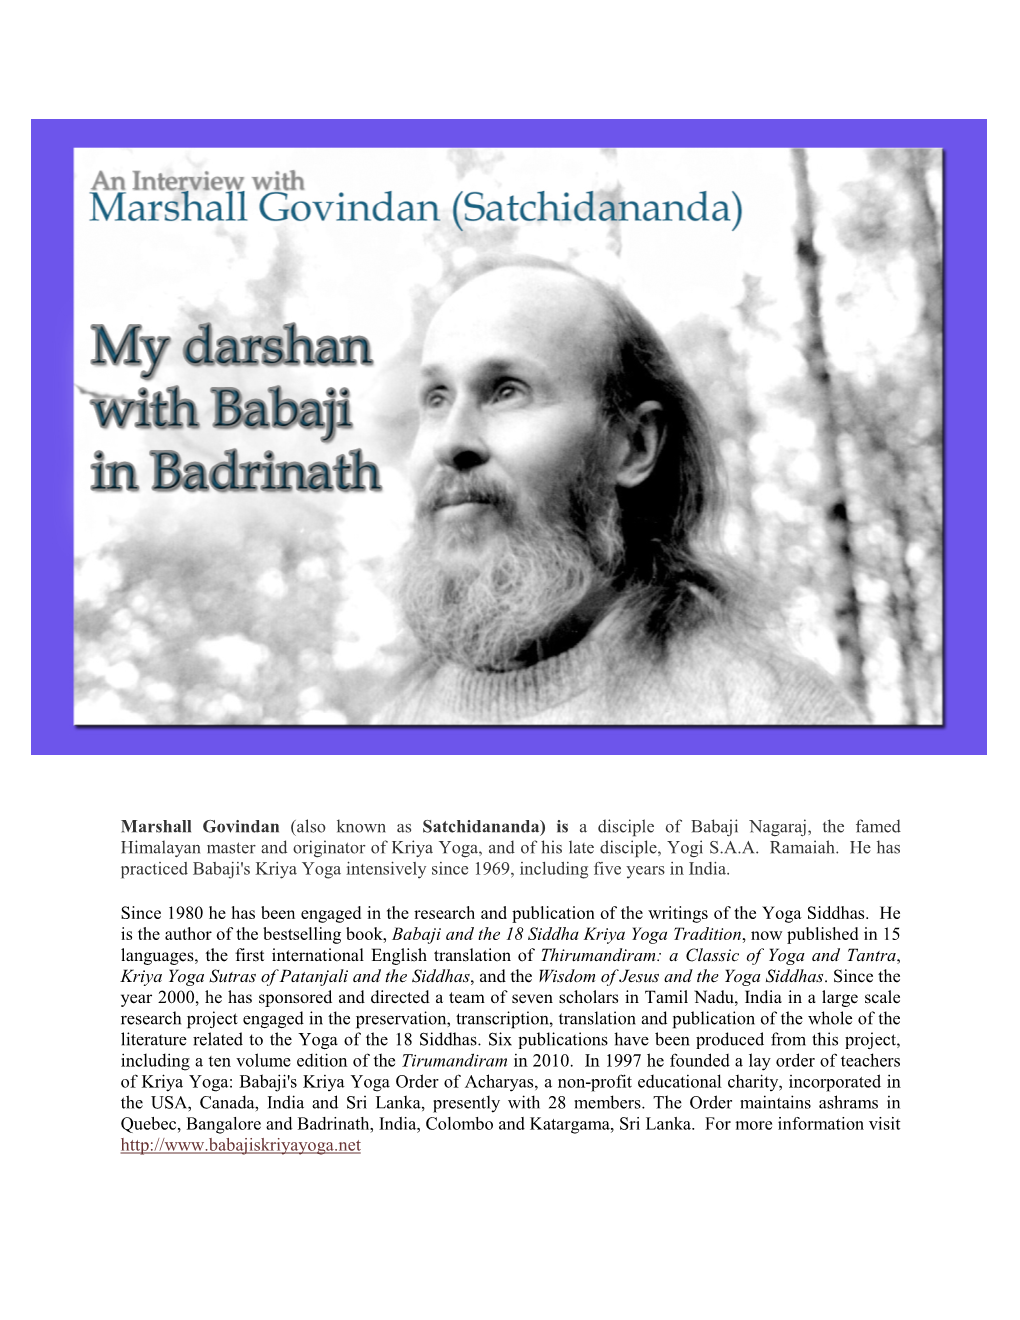 An Inteview with Marshall Govindan (Satchidananda)